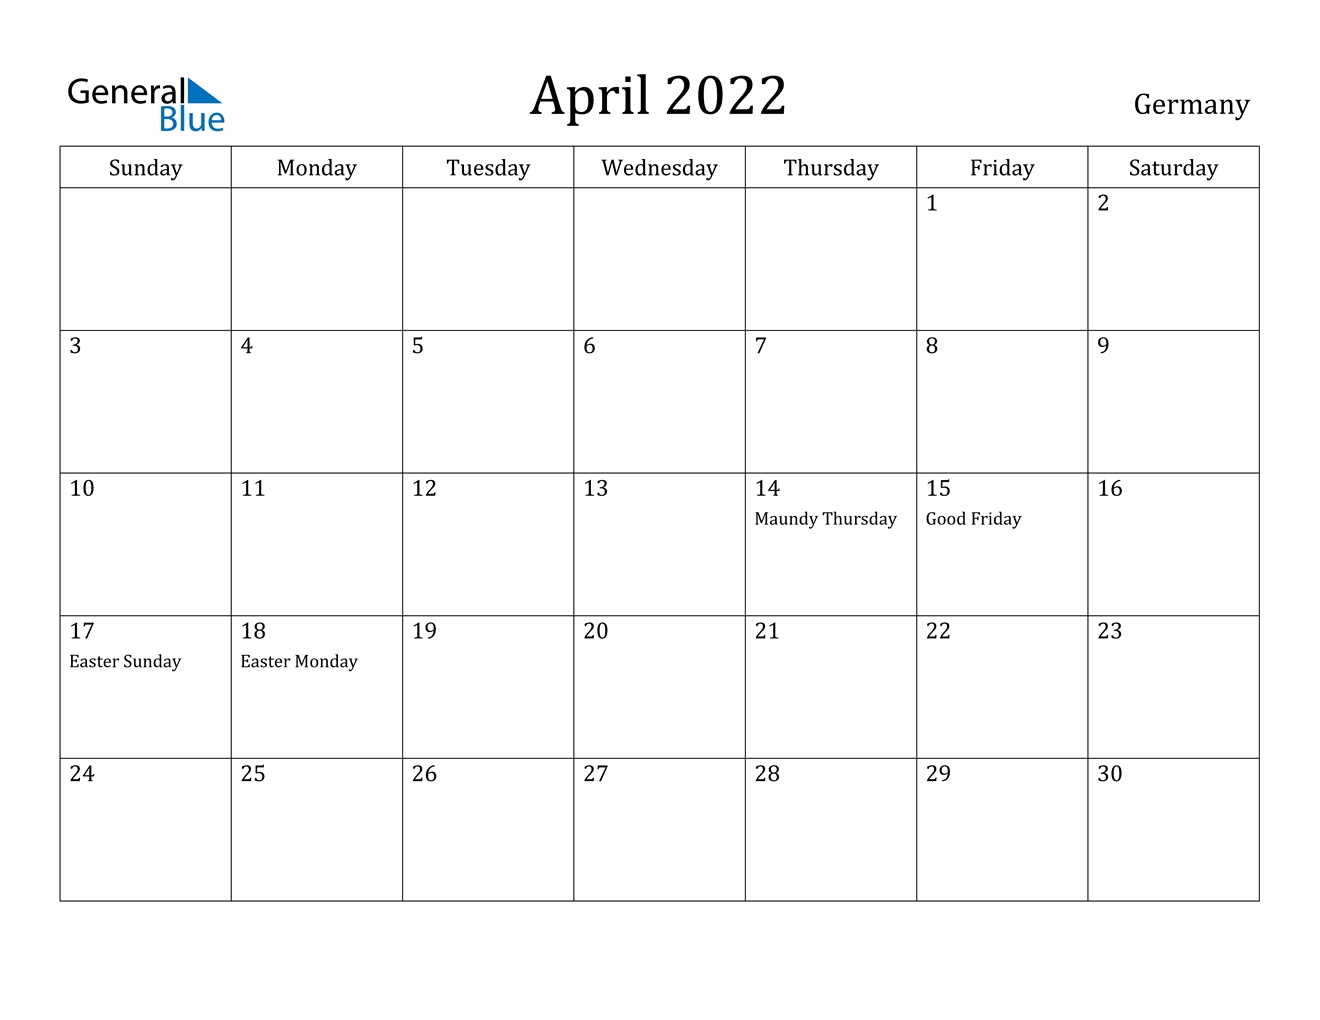 April 2022 Calendar - Germany